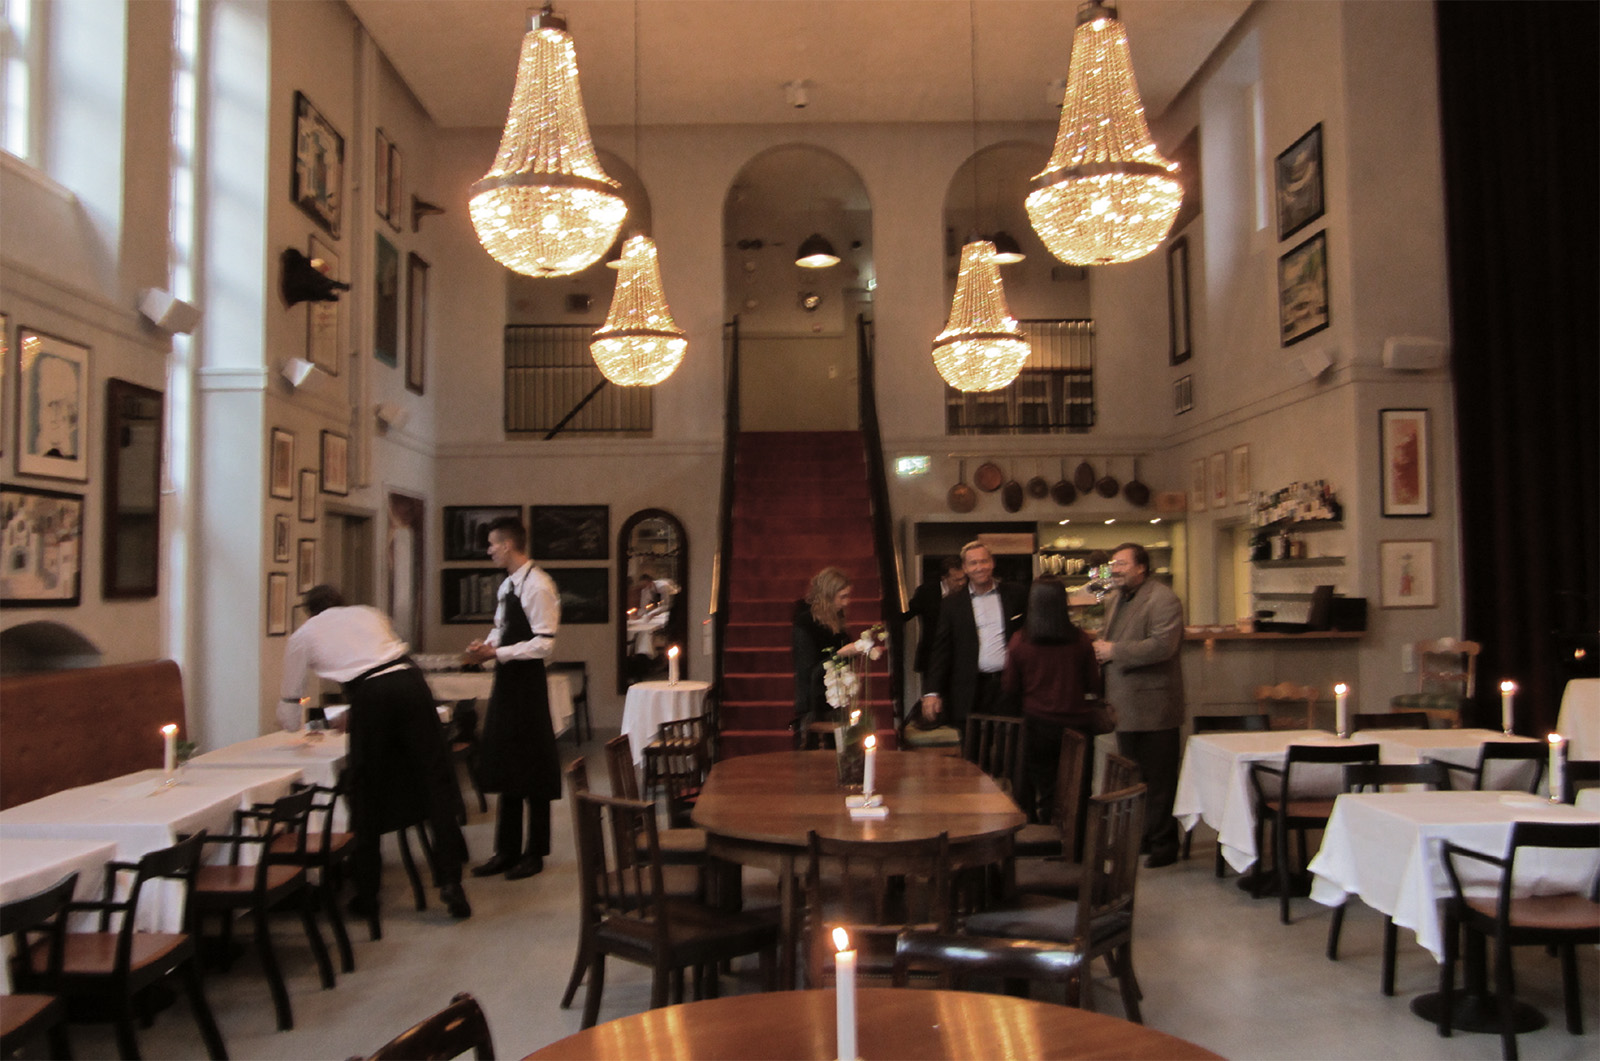 Brdr. Price Rosenborggade restaurant